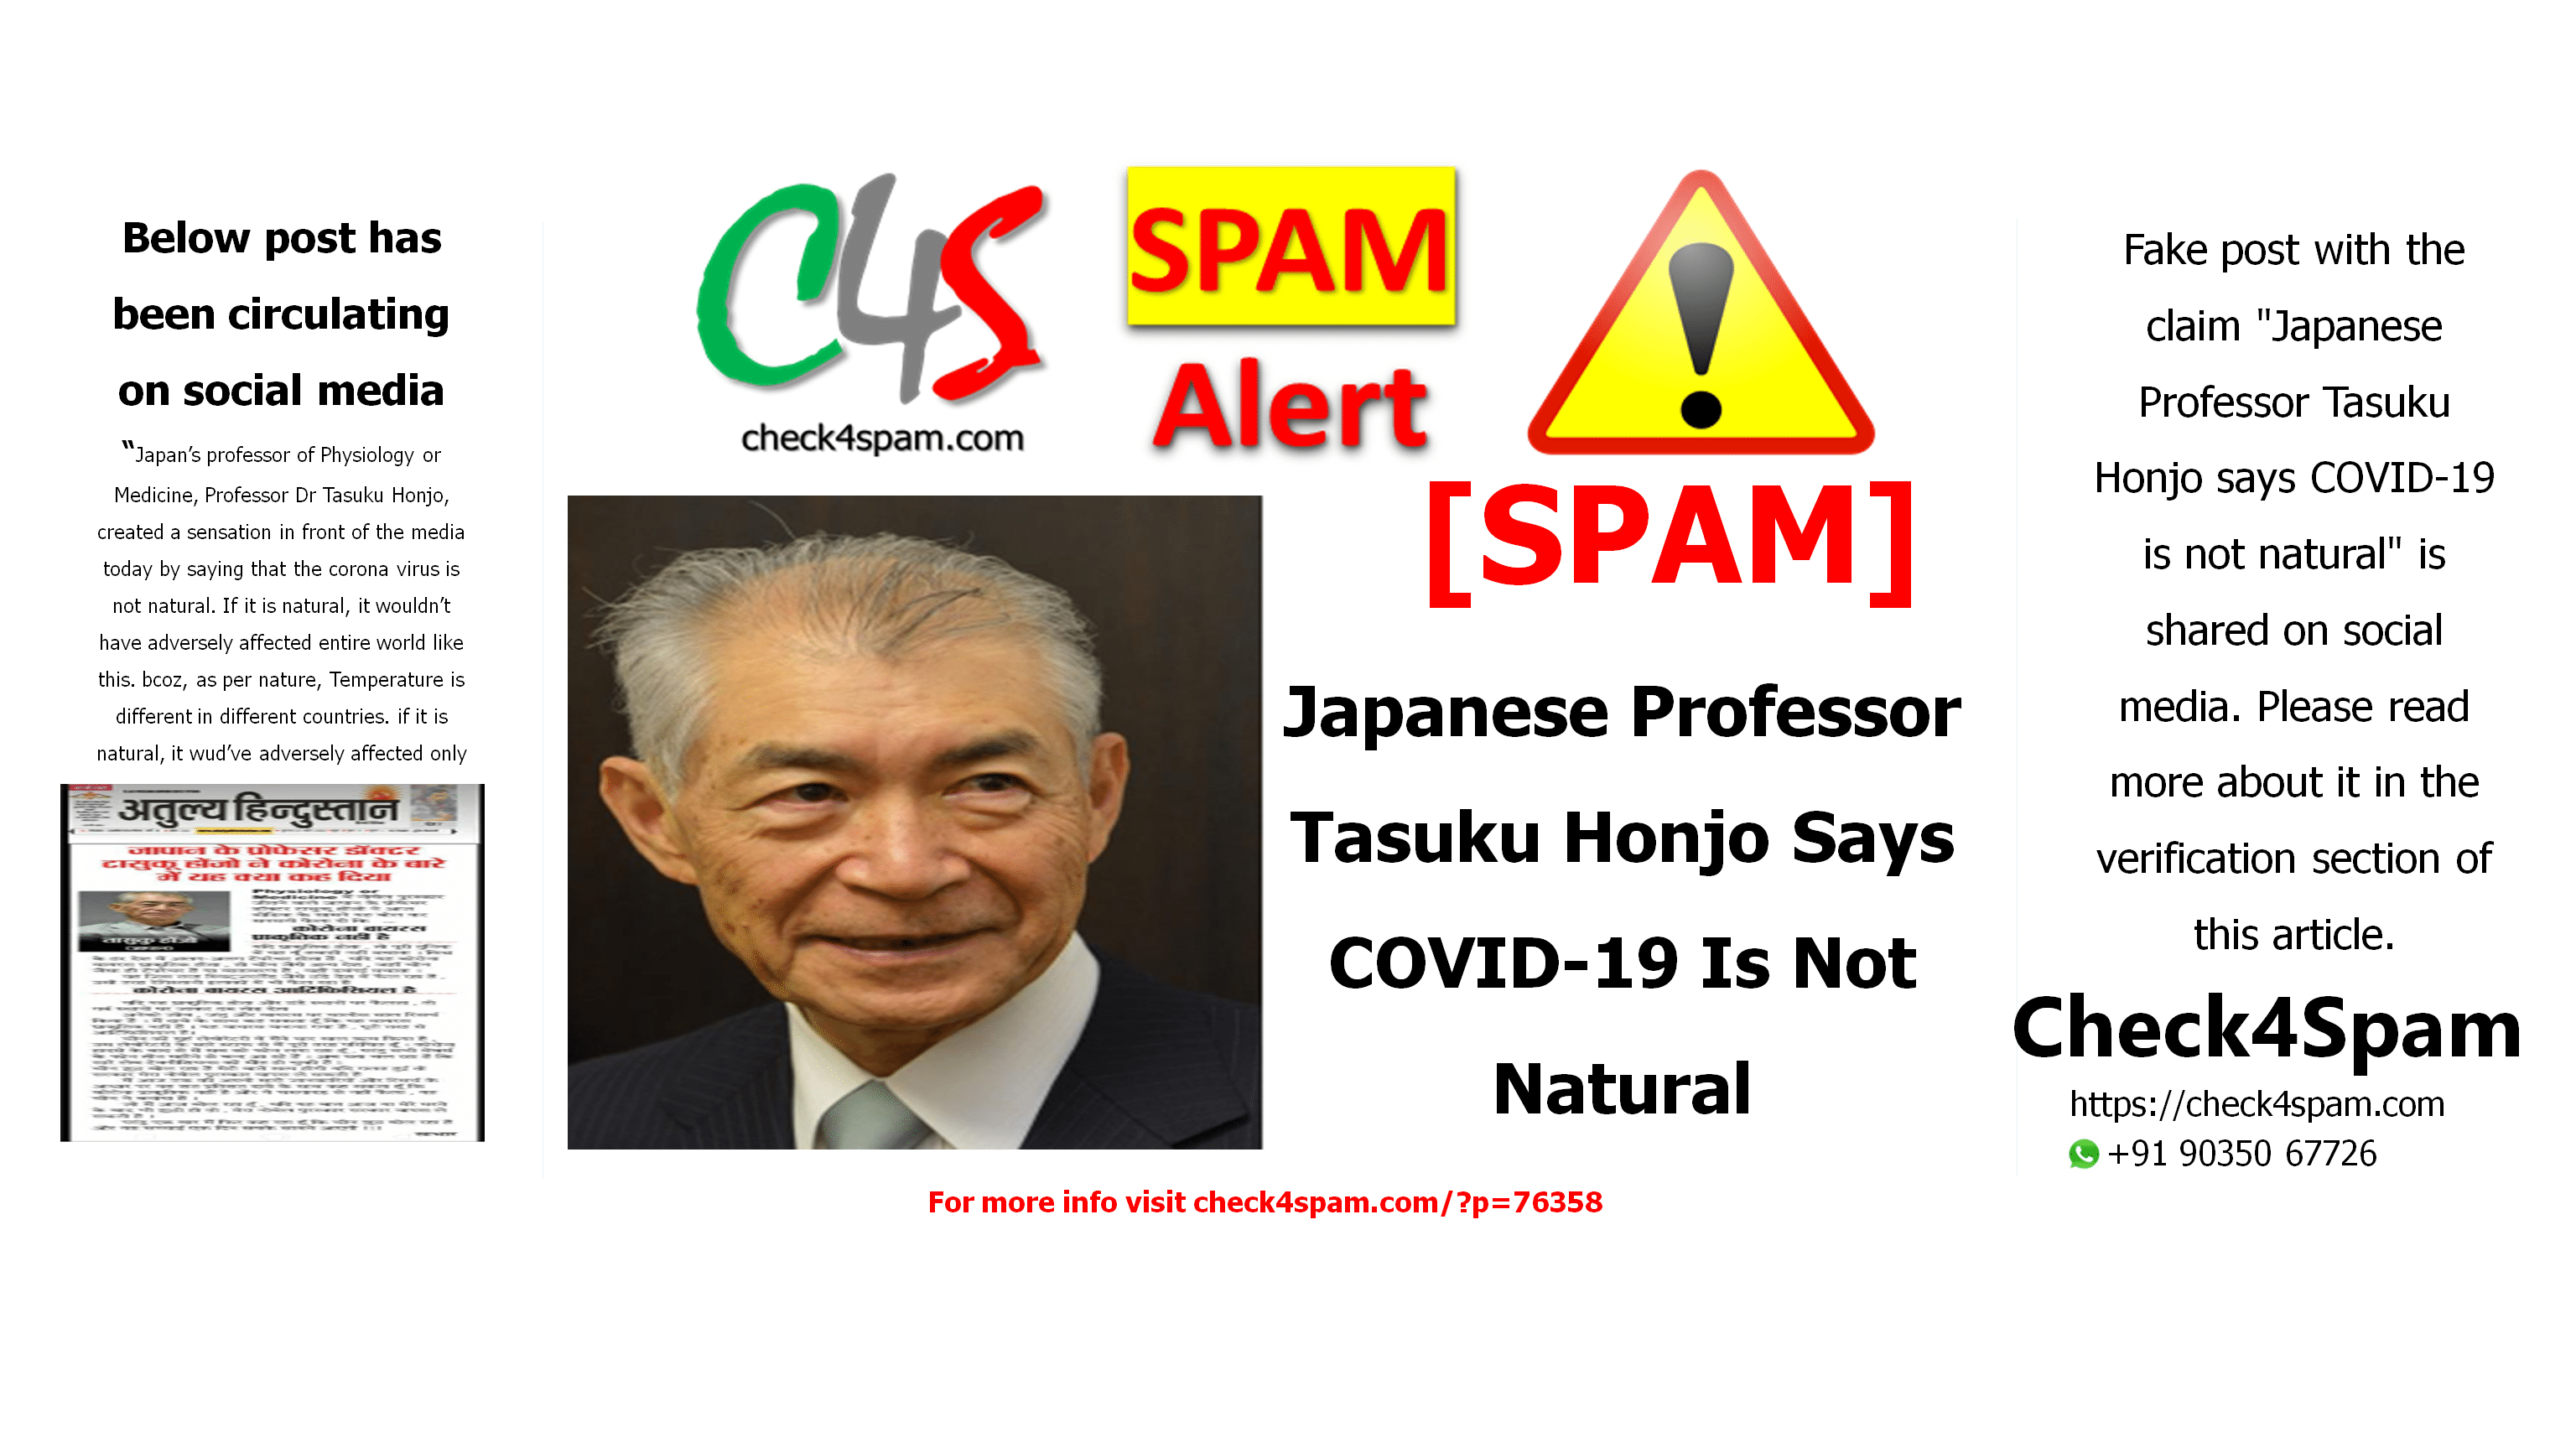 Japanese Professor Tasuku Honjo Says COVID-19 Is Not Natural